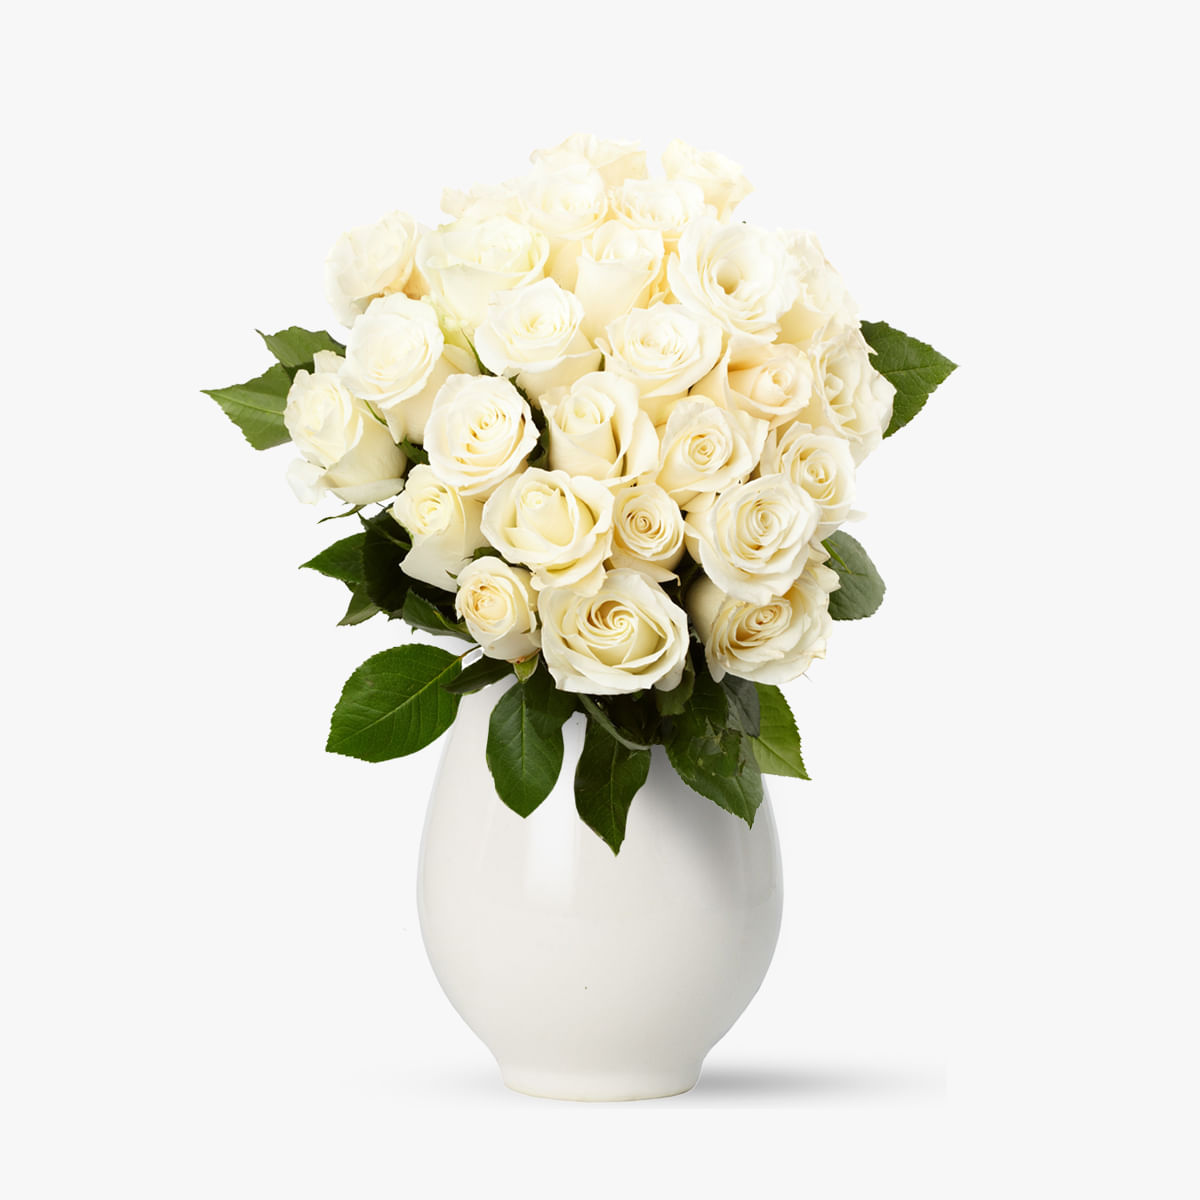 Buchet de 55 trandafiri albi – Standard albi